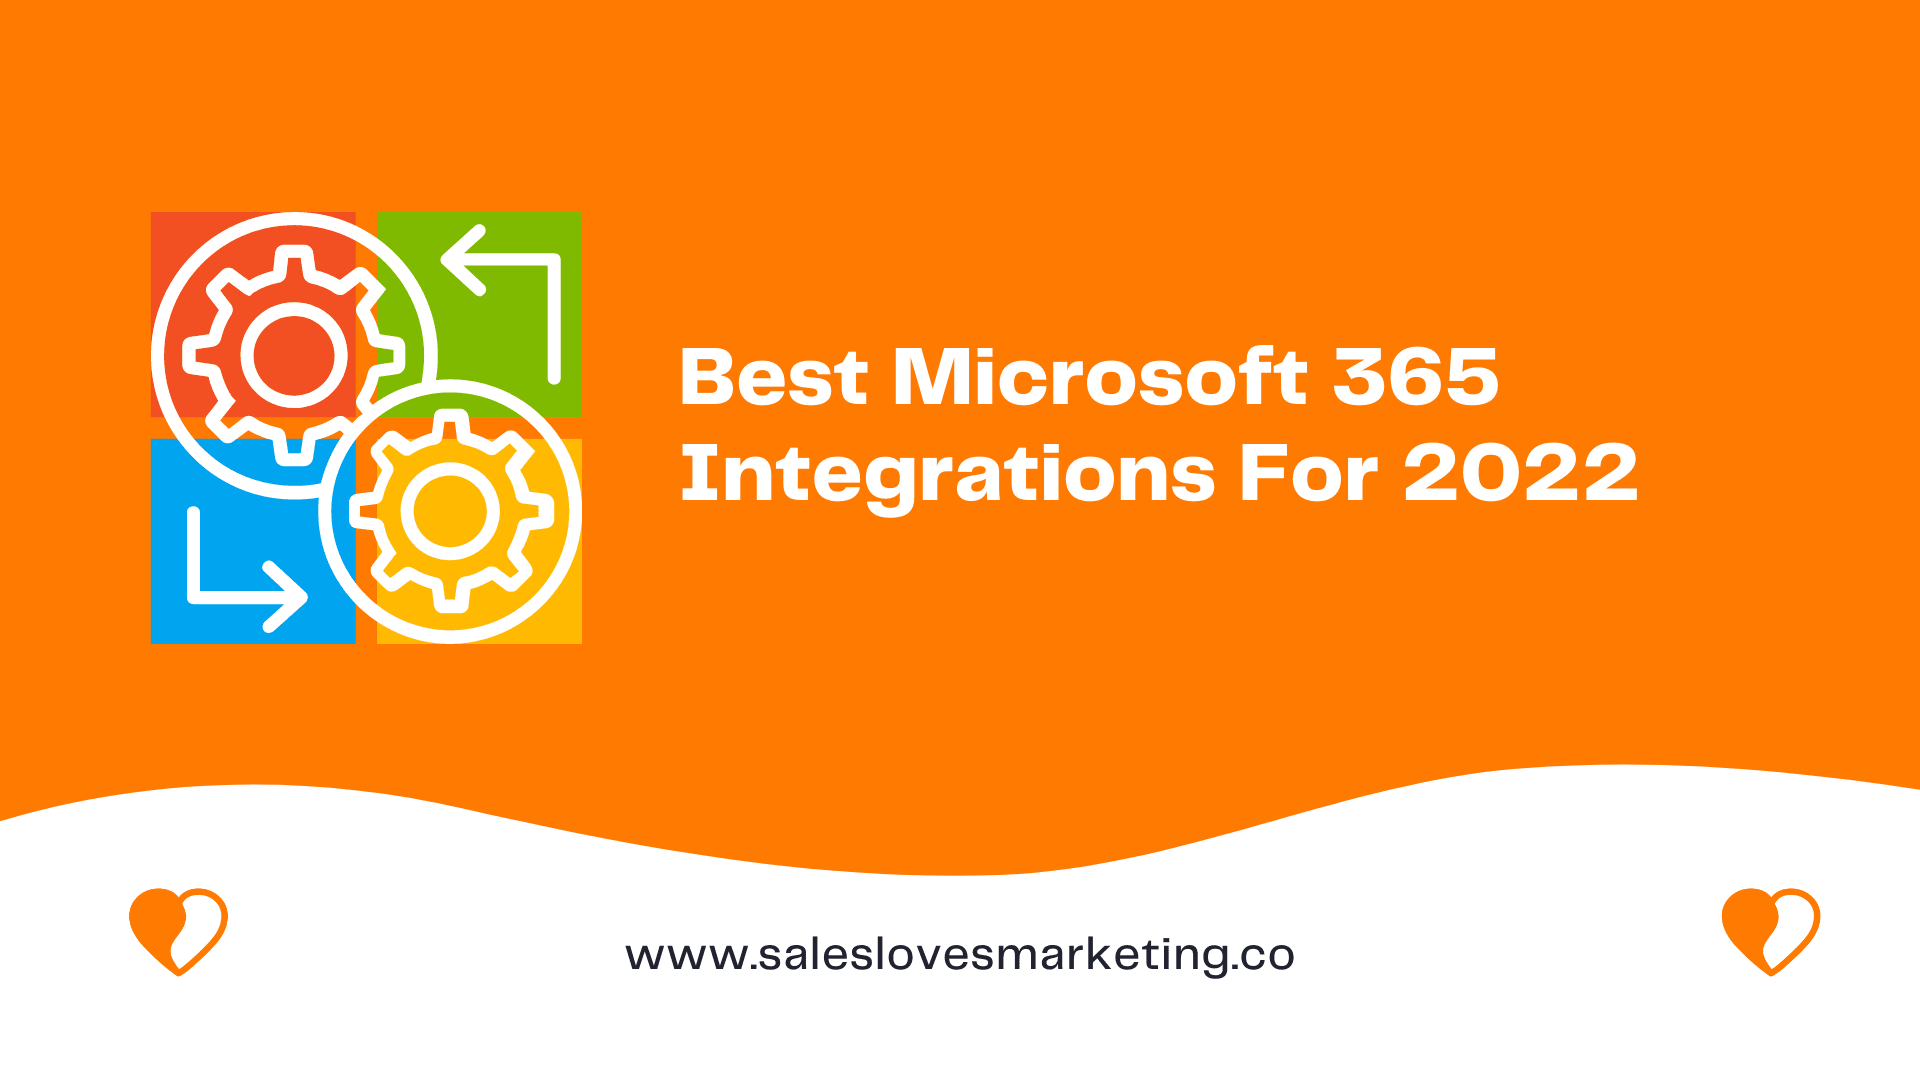 8 Best Microsoft 365 Integrations For 2022